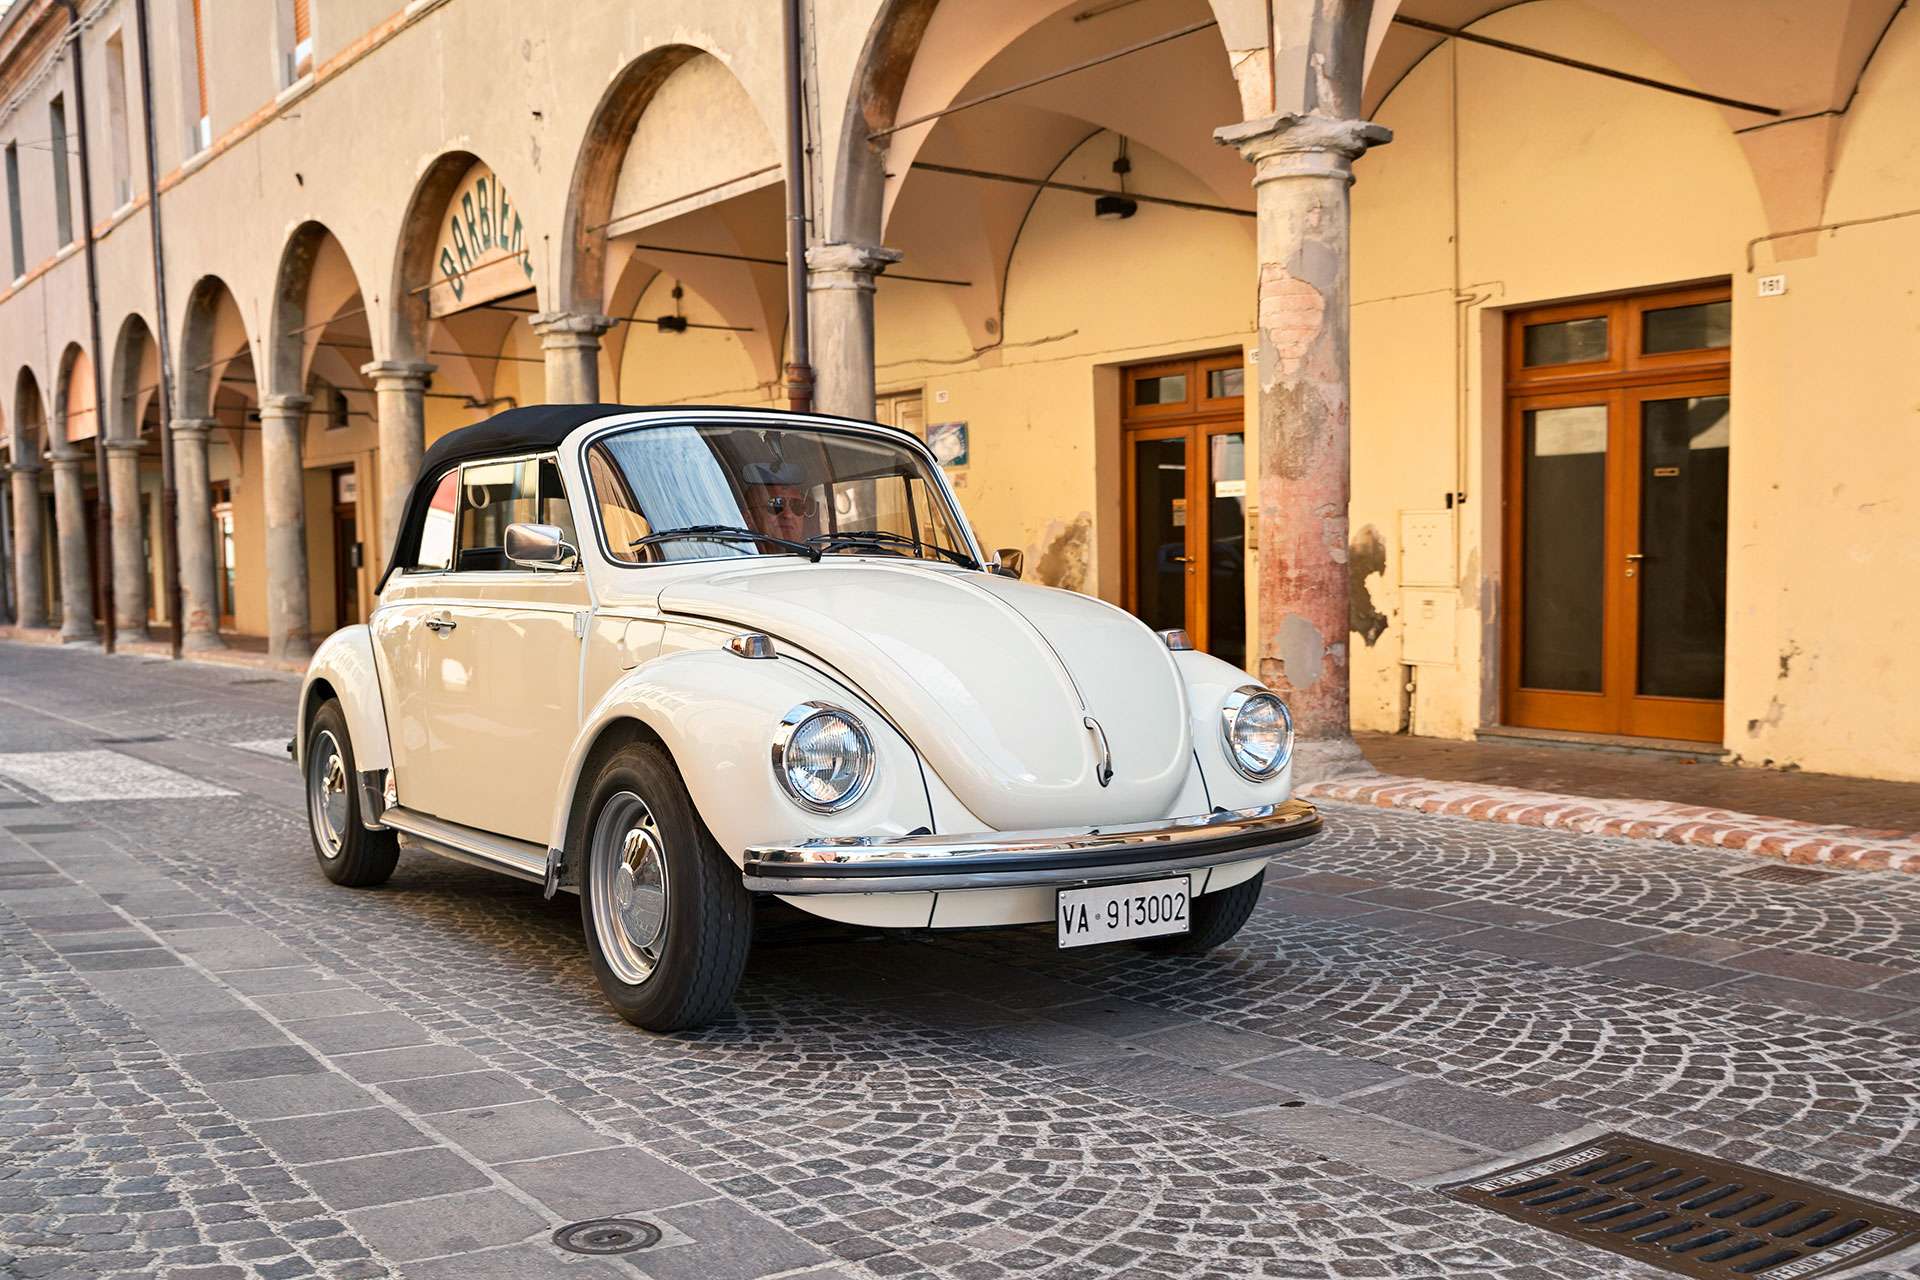 Mille Miglia Vintage Car Experience: Umbria Edition